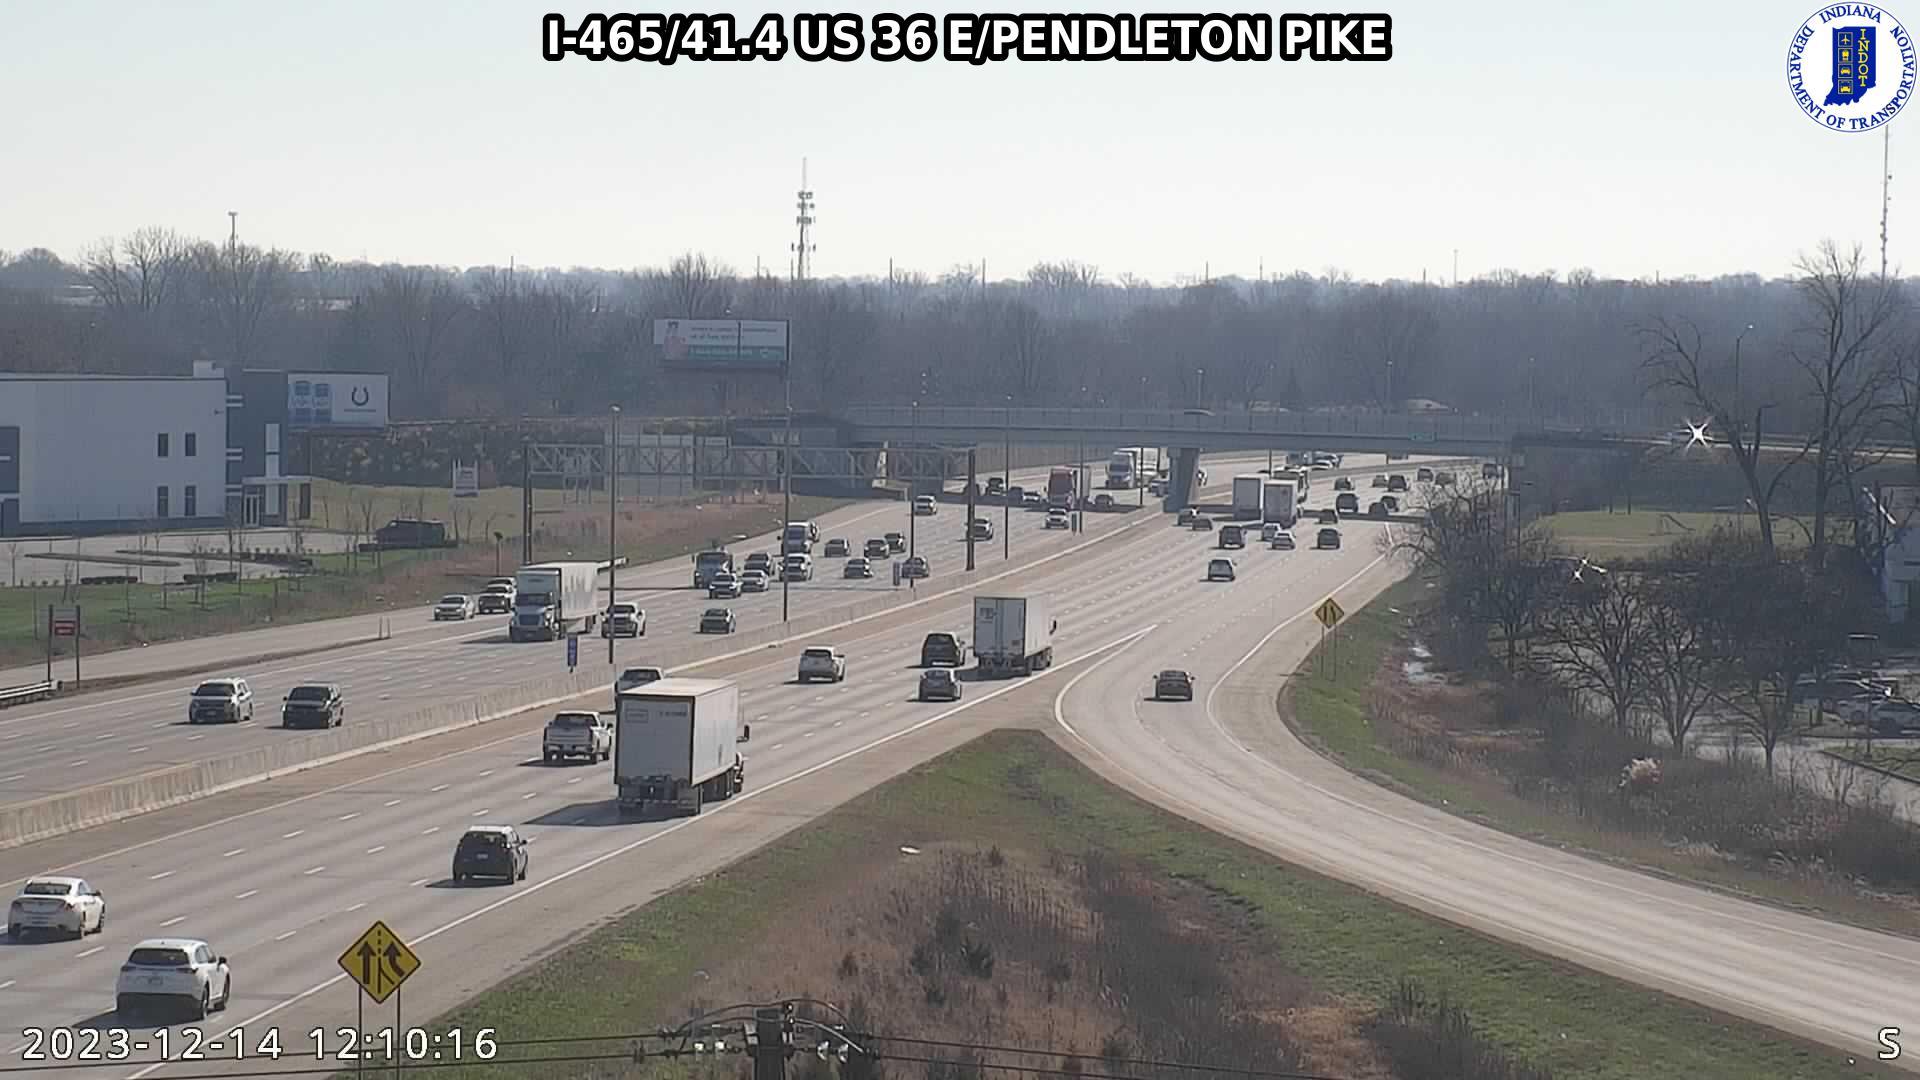 Lawrence: I-465: I-465/41.4 US 36 E/PENDLETON PIKE Traffic Camera